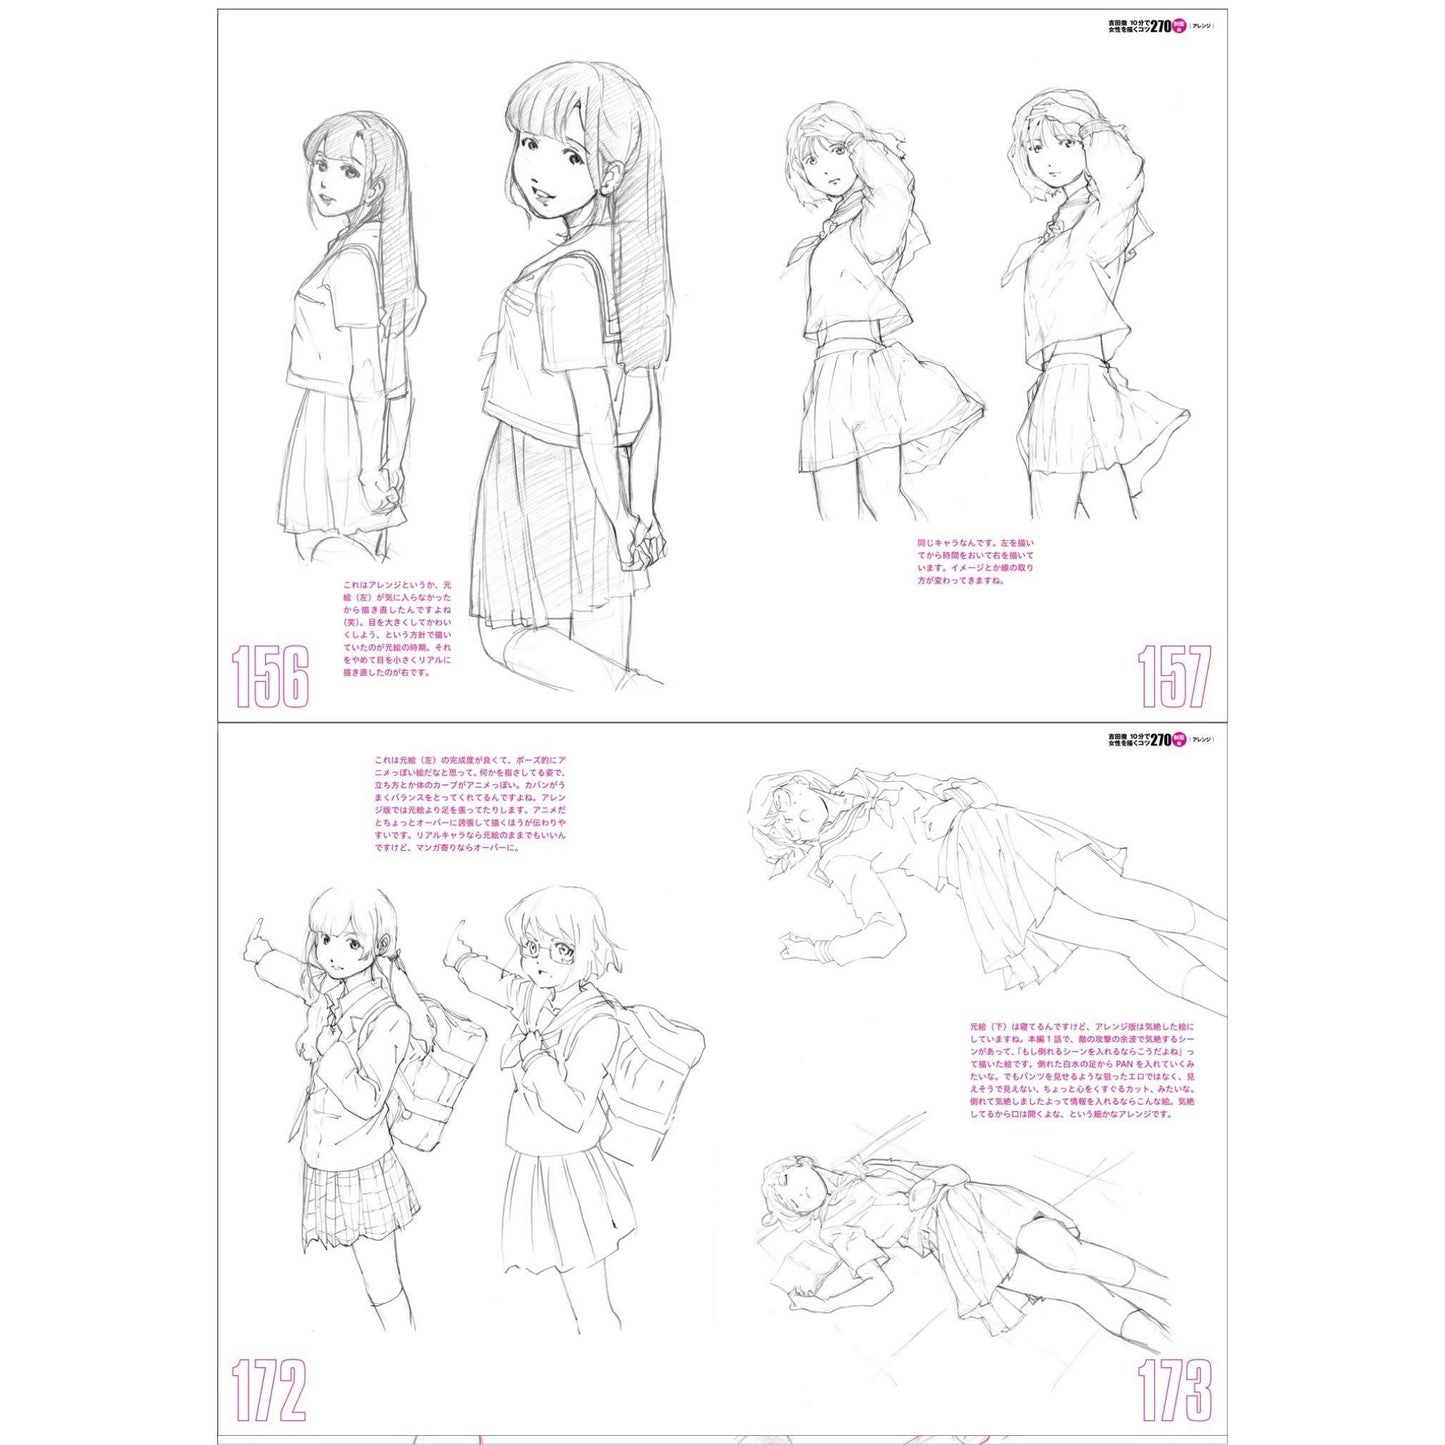 How to draw - jap. Zeichenbuch - Toru Yoshida: 270 Tips on How to Draw Women in 10 Minutes